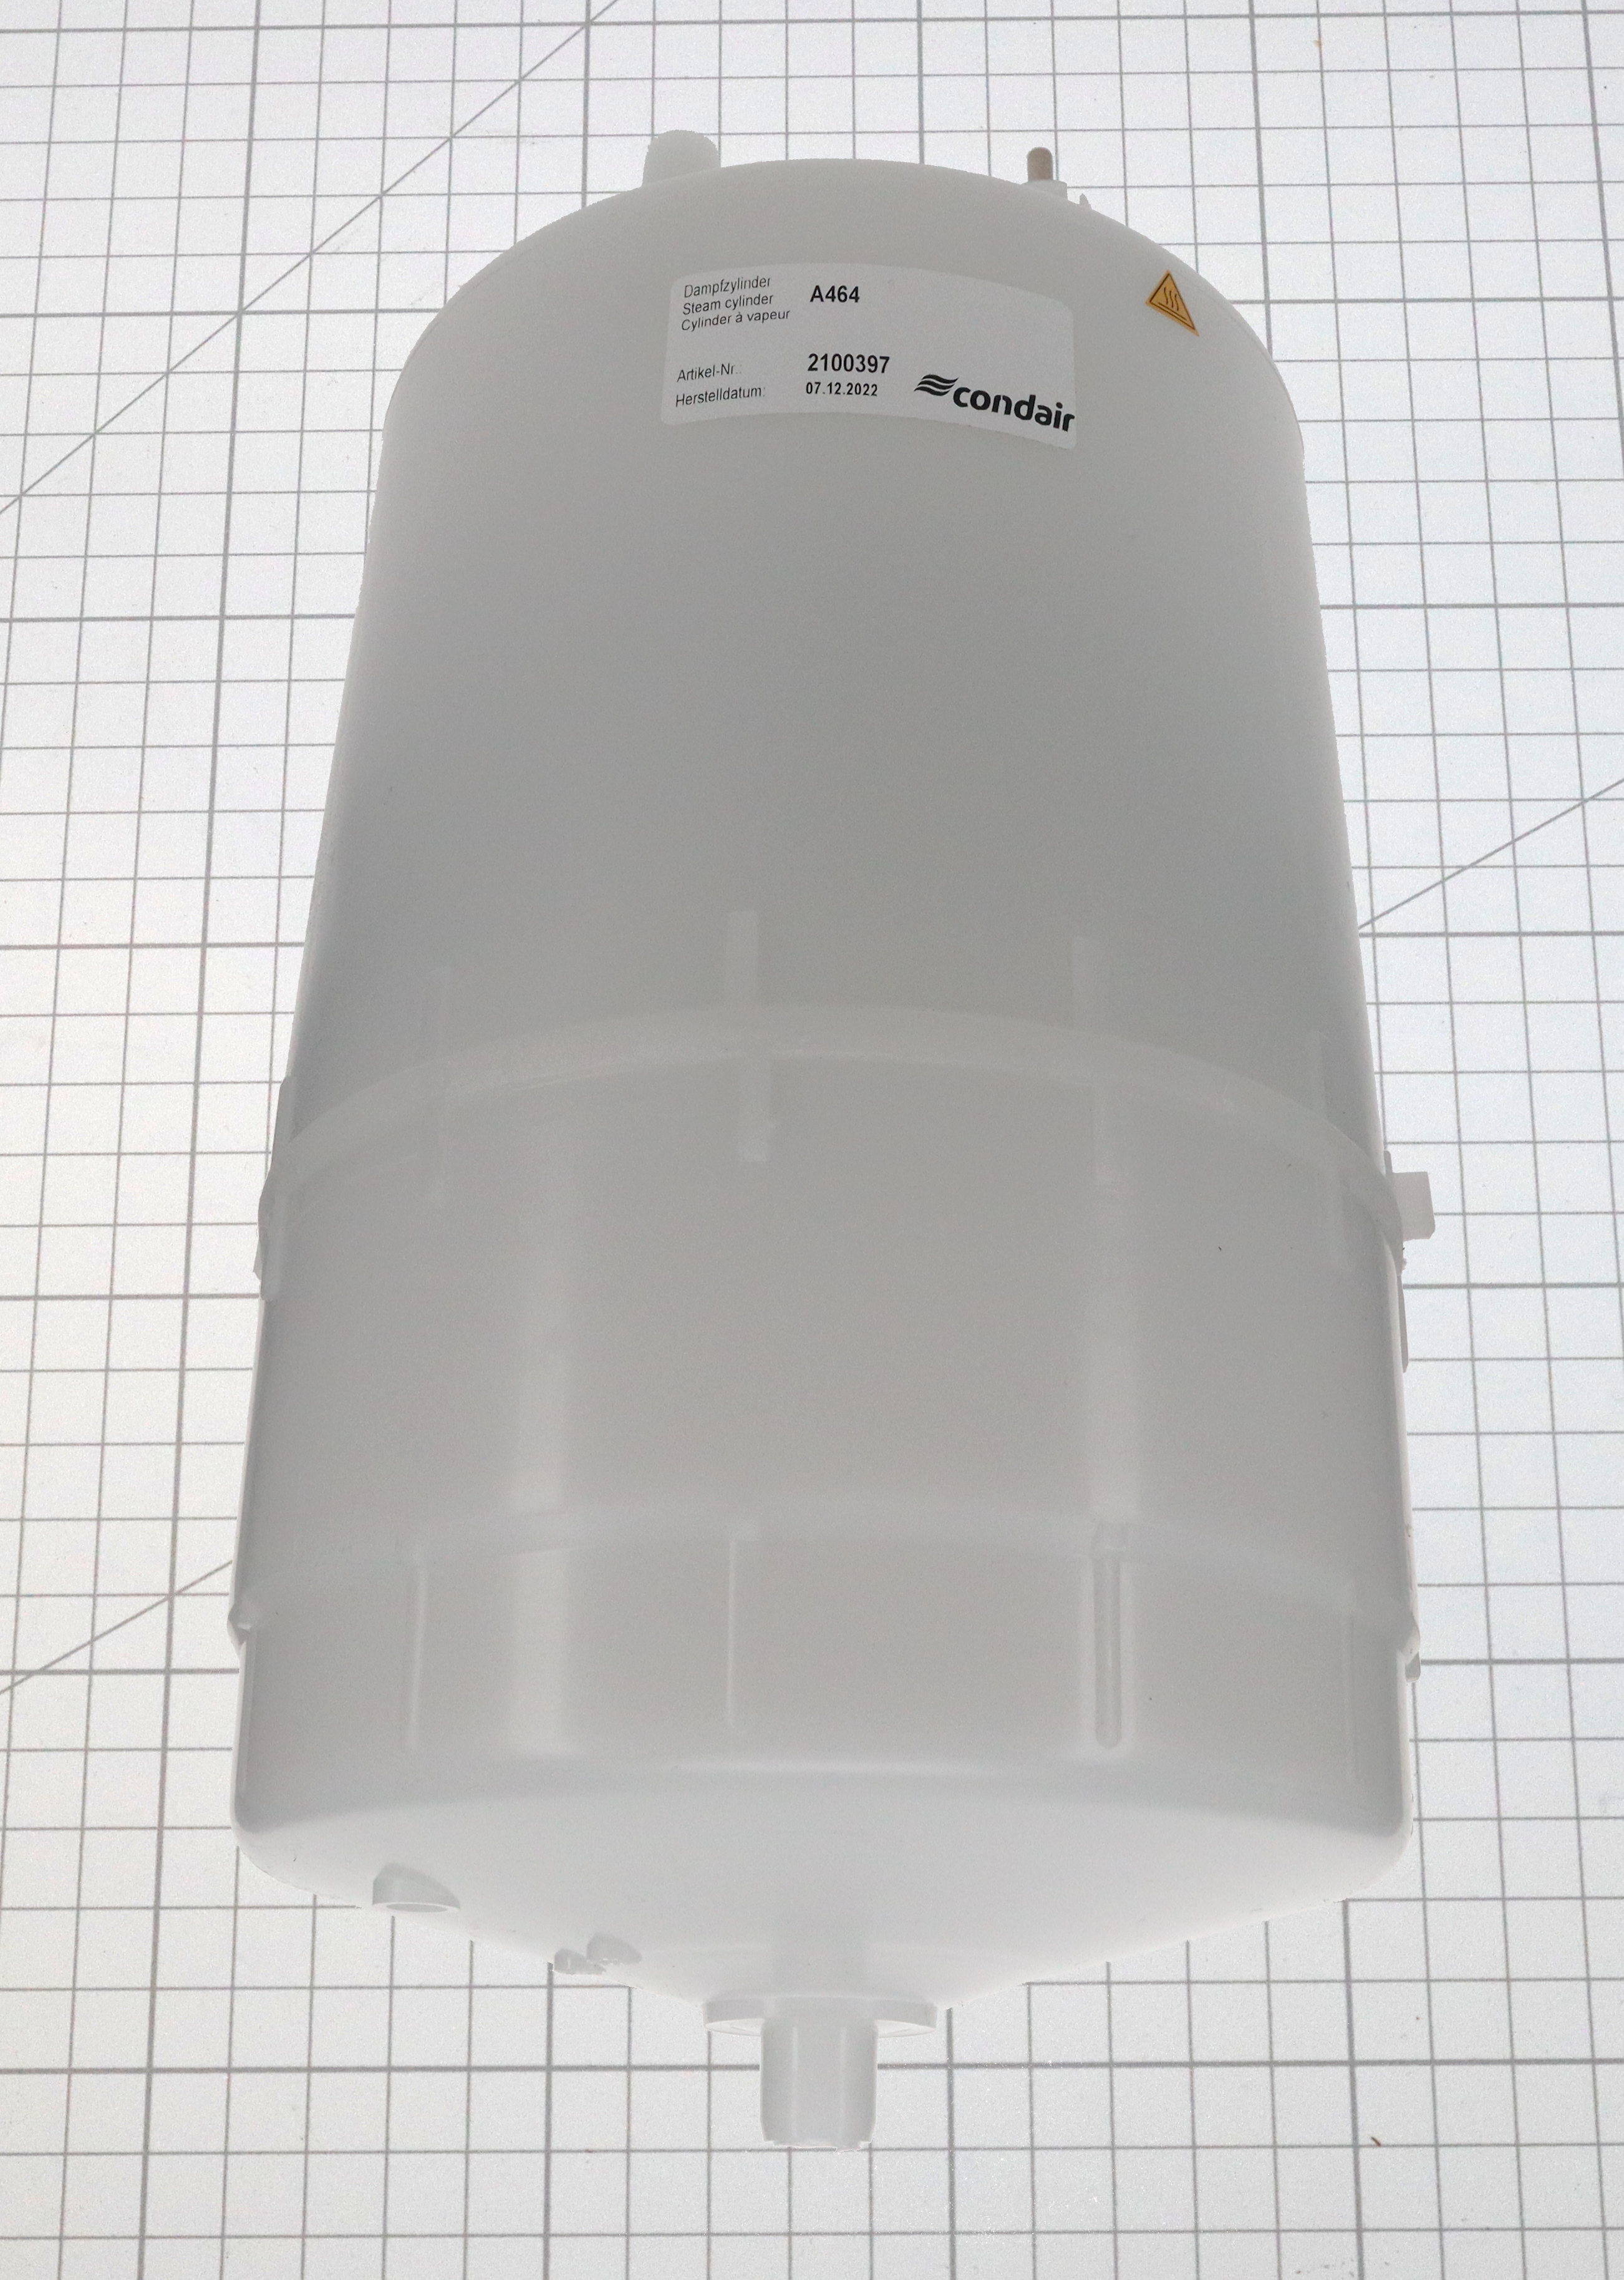 Condair Cylinder A464